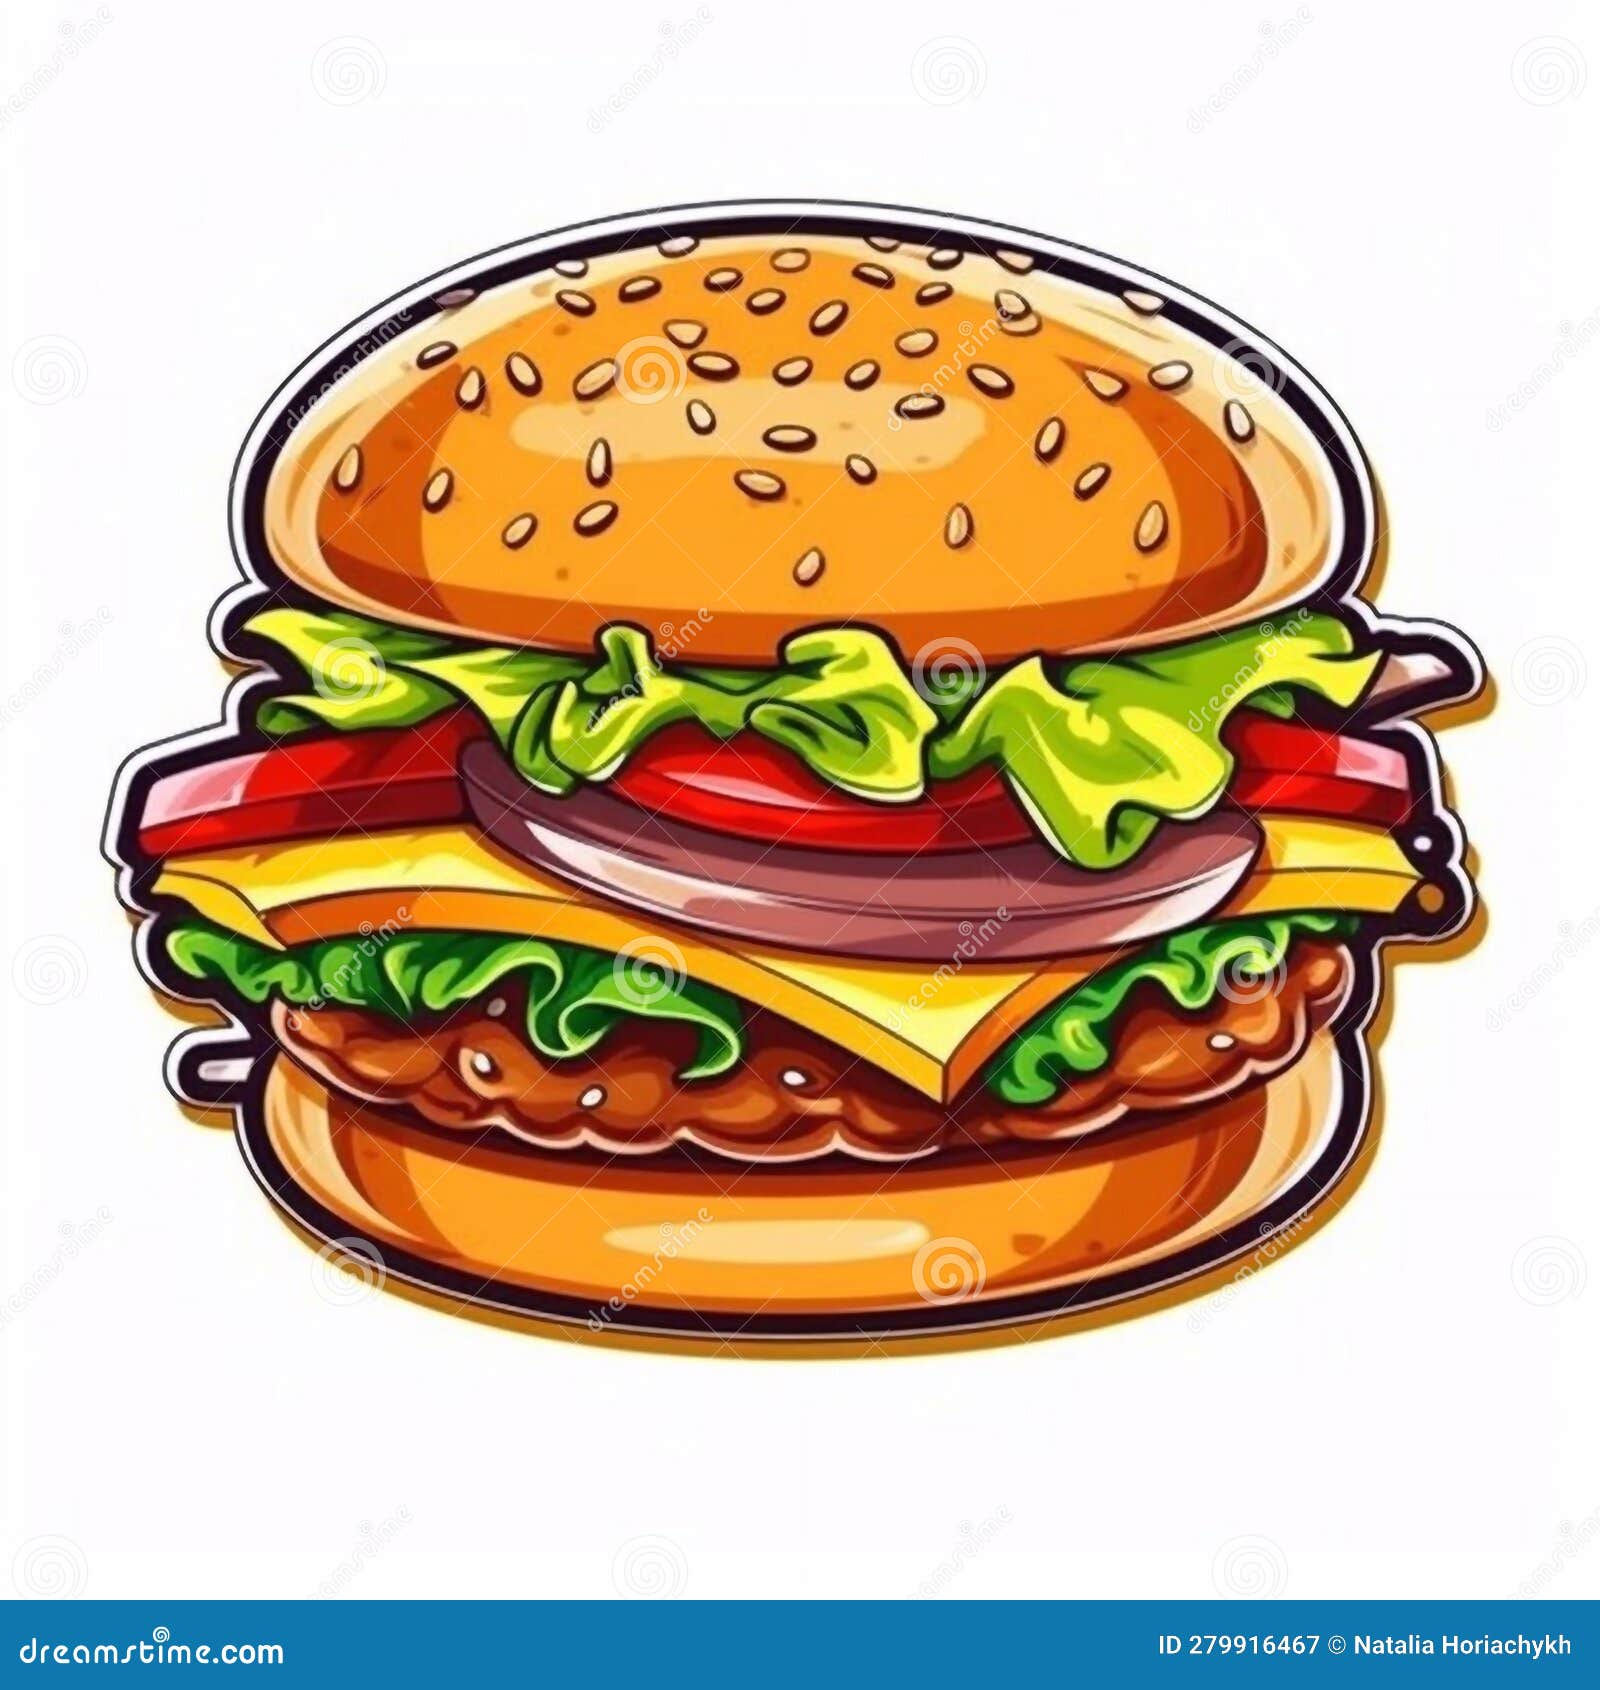 https://thumbs.dreamstime.com/z/burger-logo-illustration-burger-sticker-illustration-burger-baner-delivery-burgers-burger-logo-illustration-burger-sticker-279916467.jpg